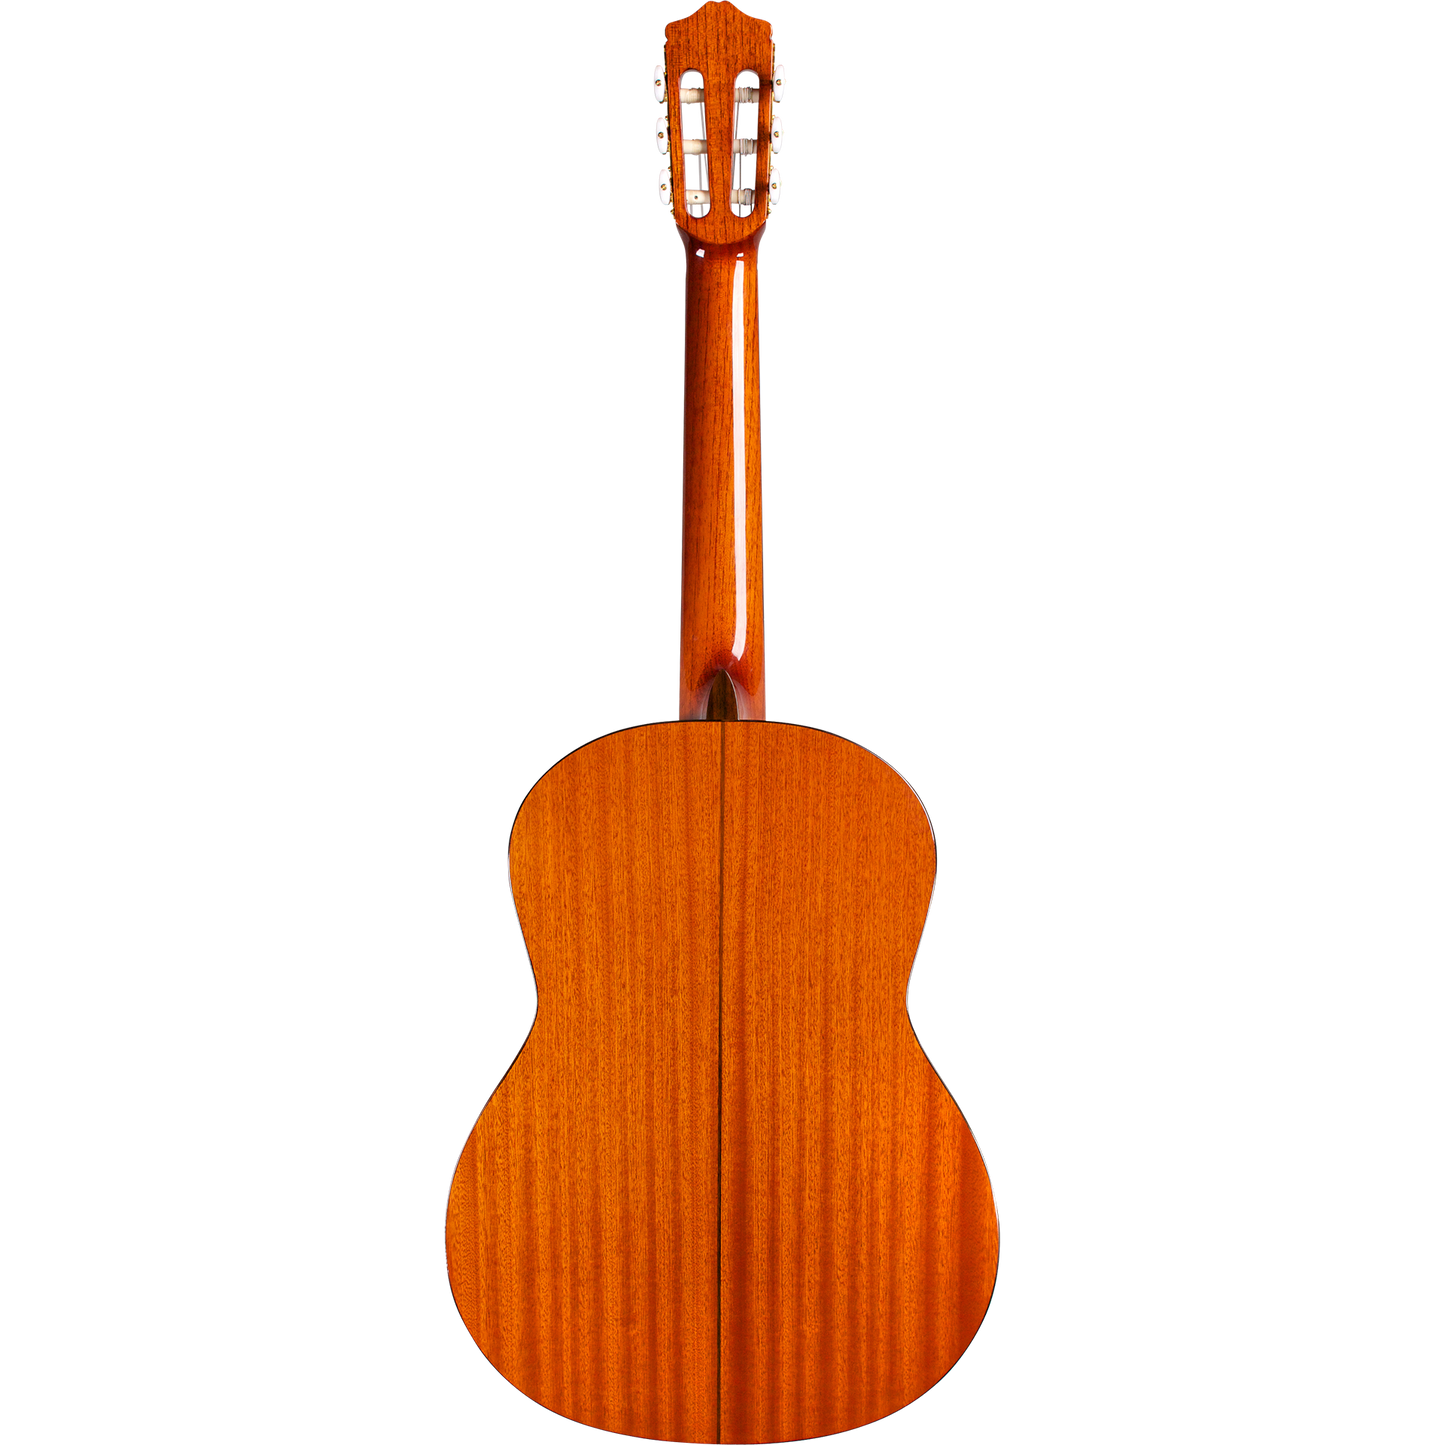 Cordoba C5 Classical Acoustic Guitar in Natural Finish